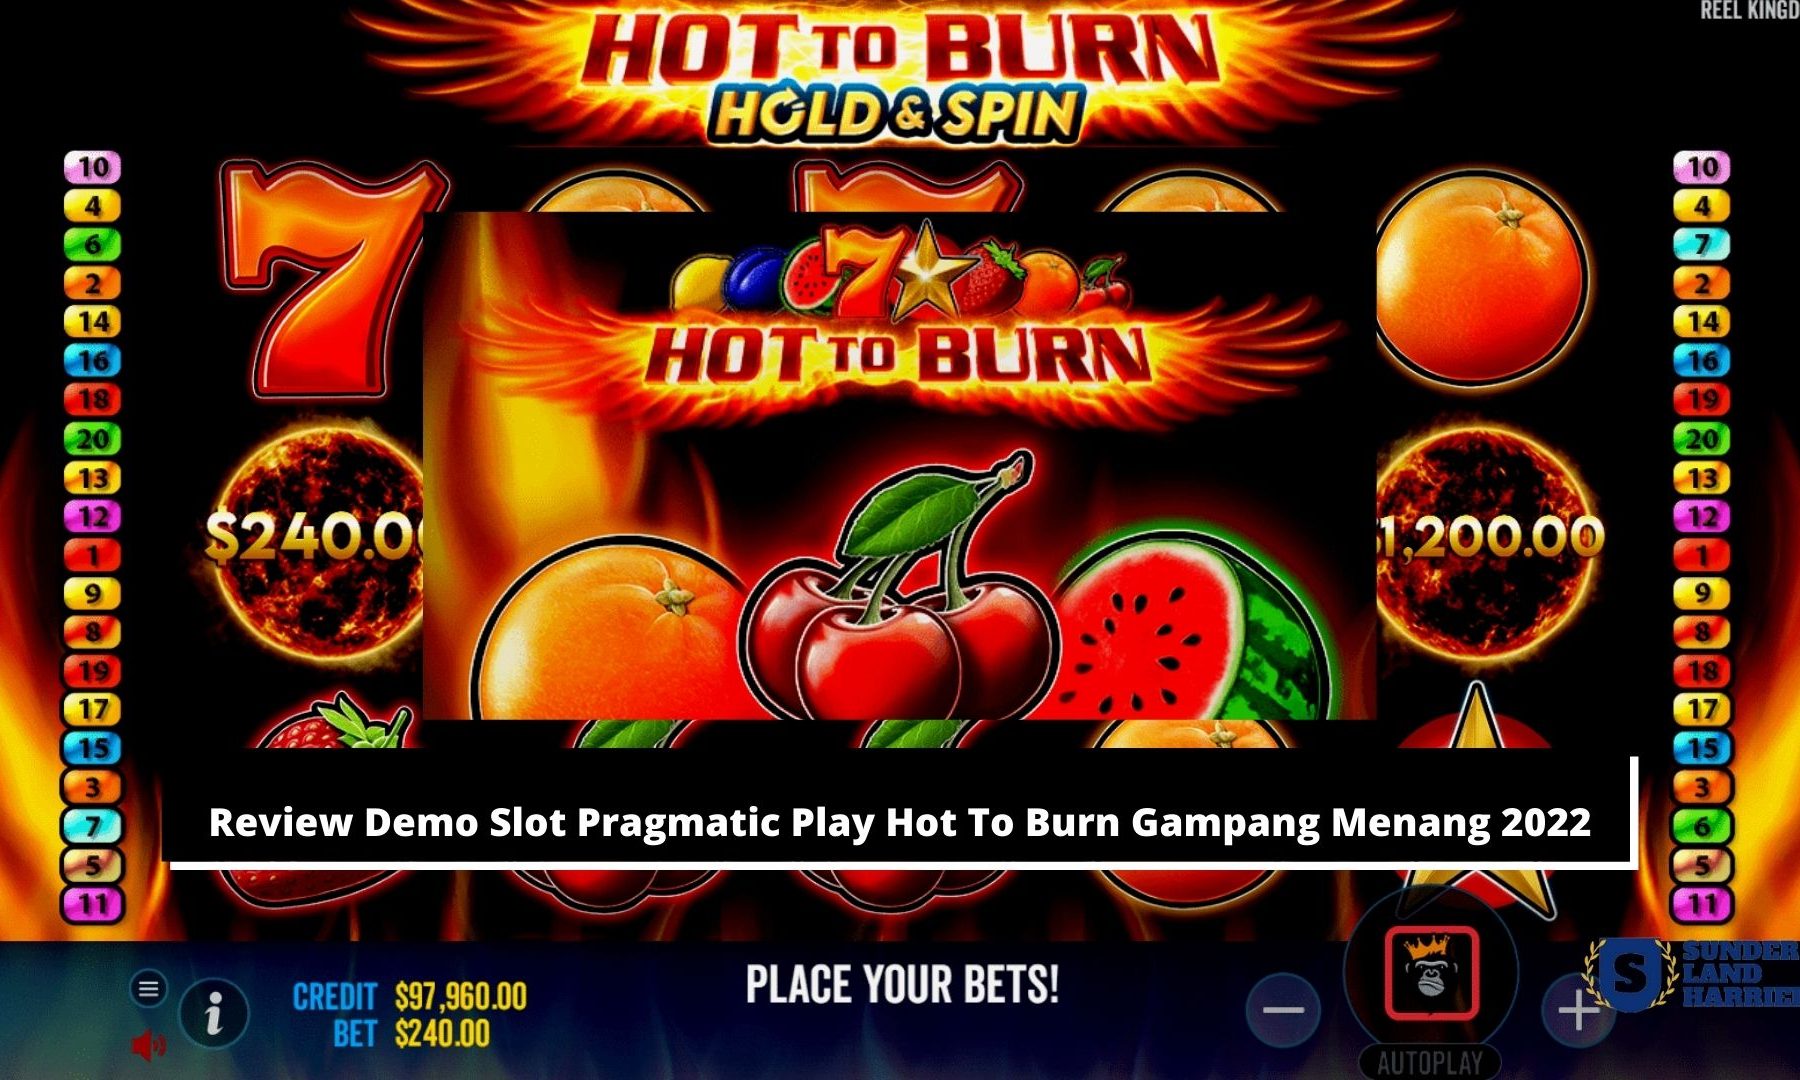 Review Demo Slot Pragmatic Play Hot To Burn Gampang Menang 2022